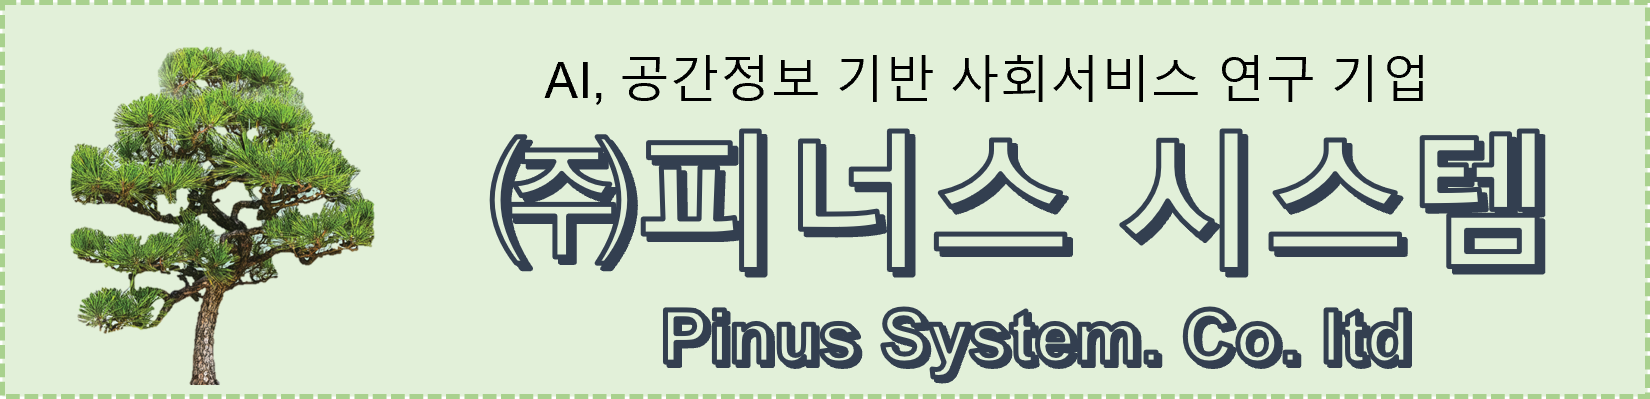 pinus-system.png